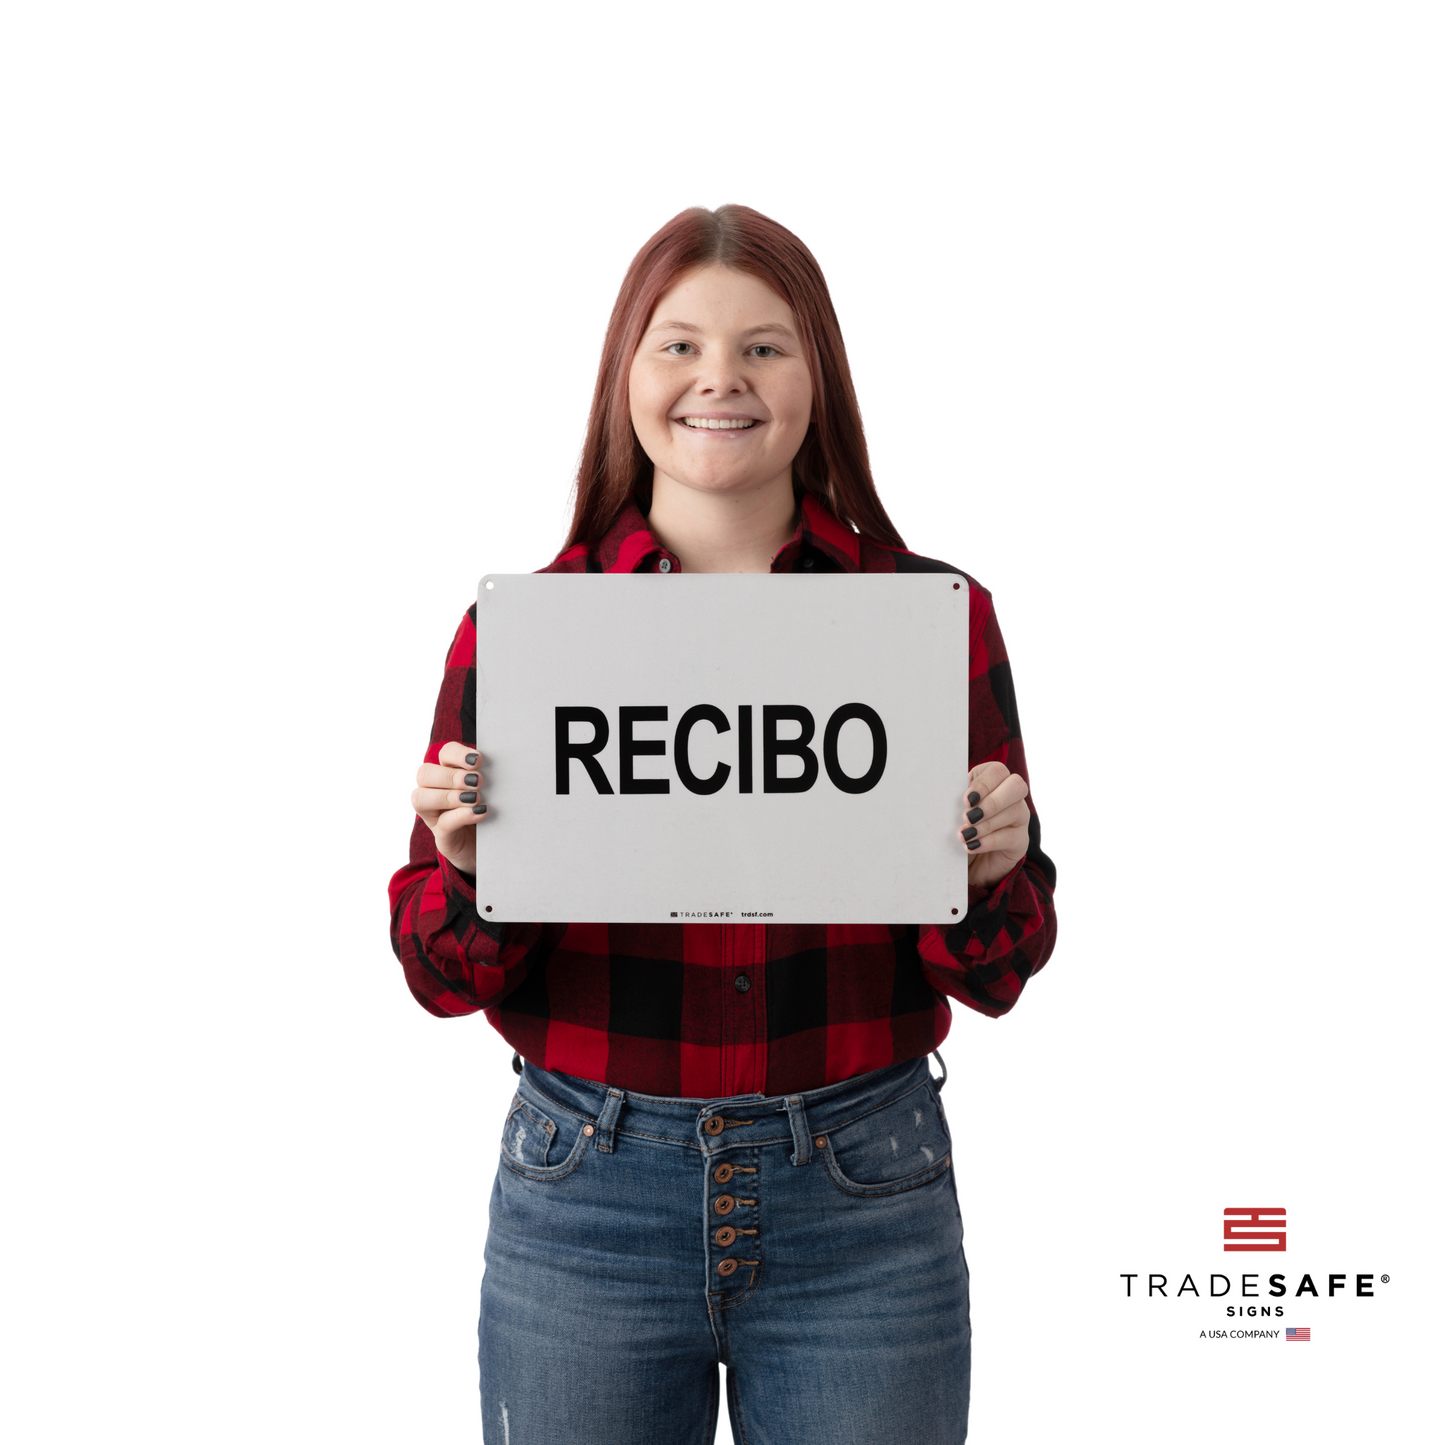 a person holding the recibo sign